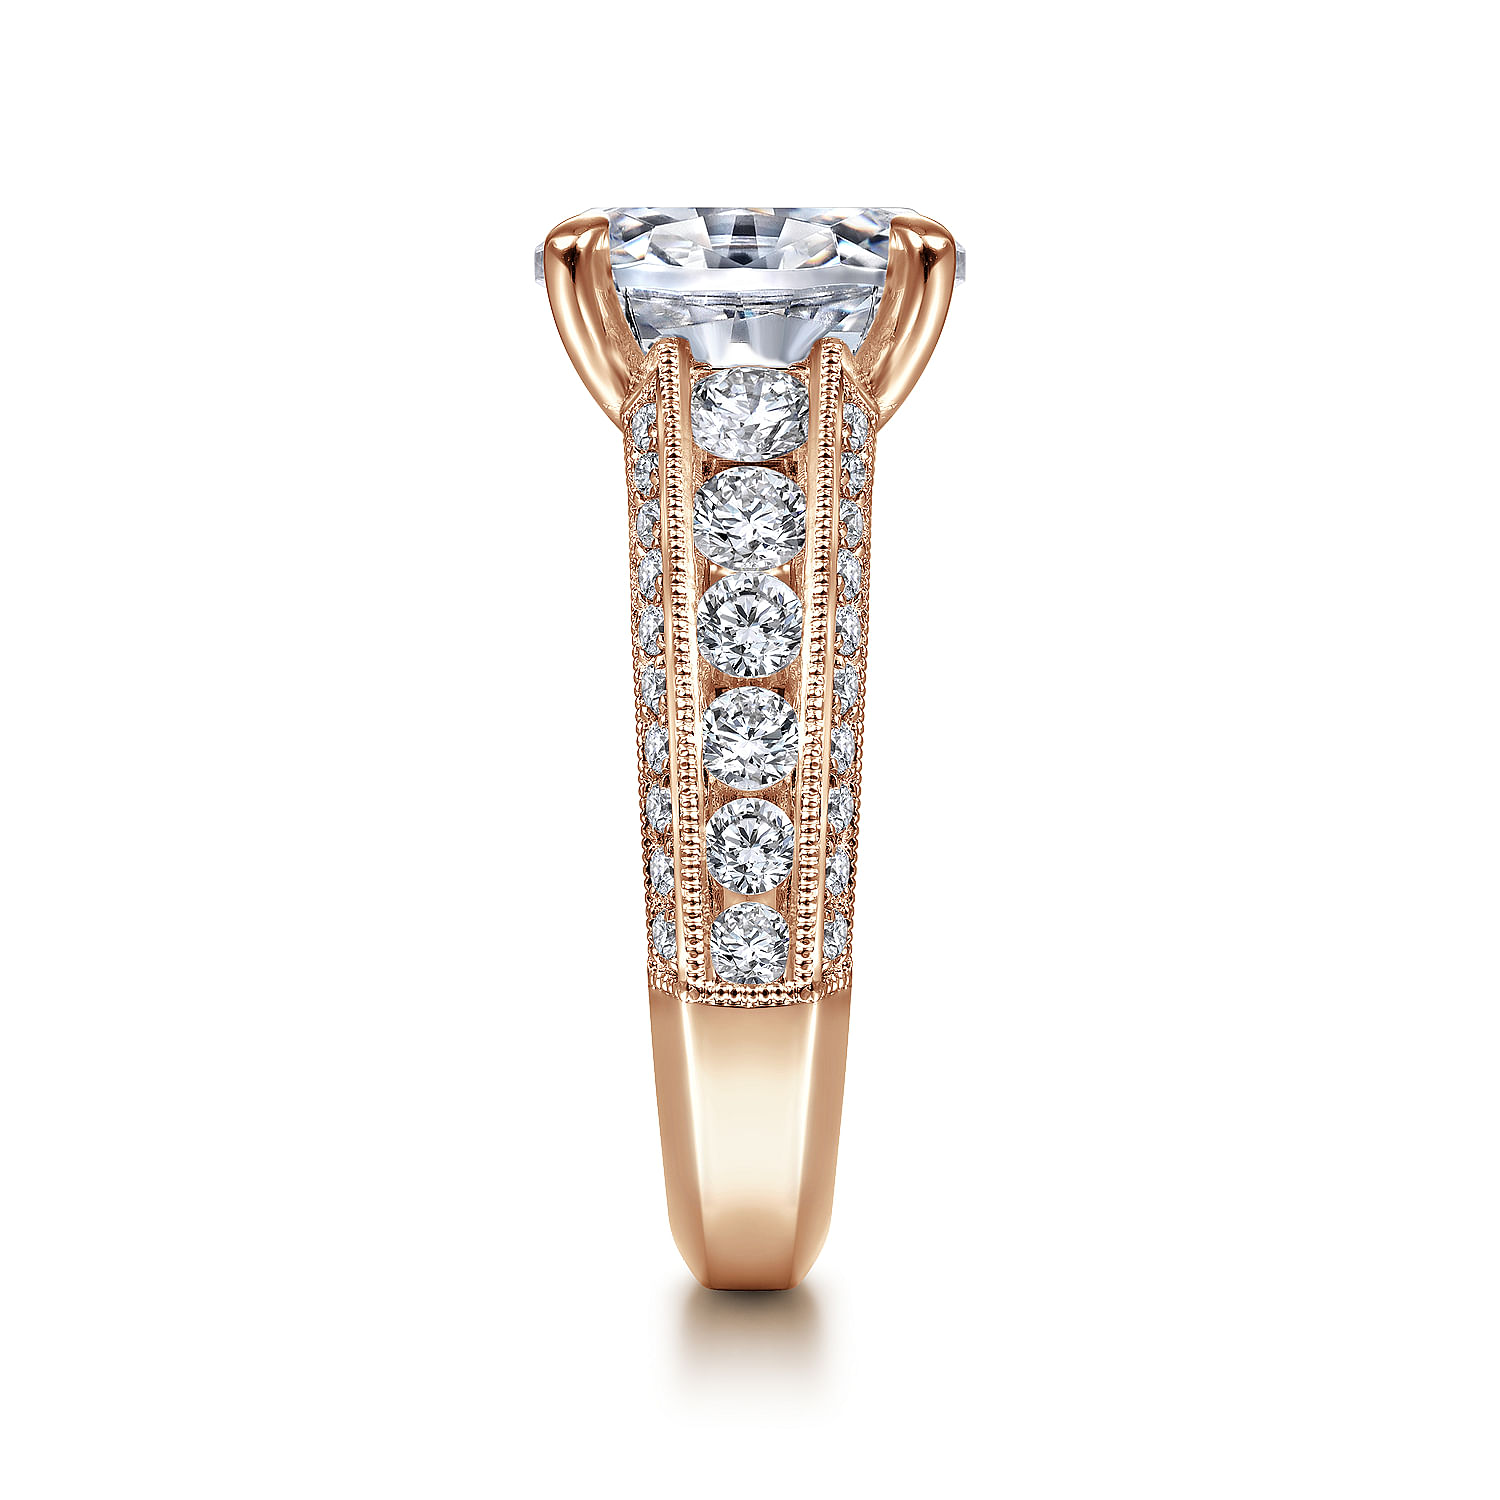 Vintage Inspired 14K Rose Gold Wide Band Oval Diamond Channel Set Engagement Ring